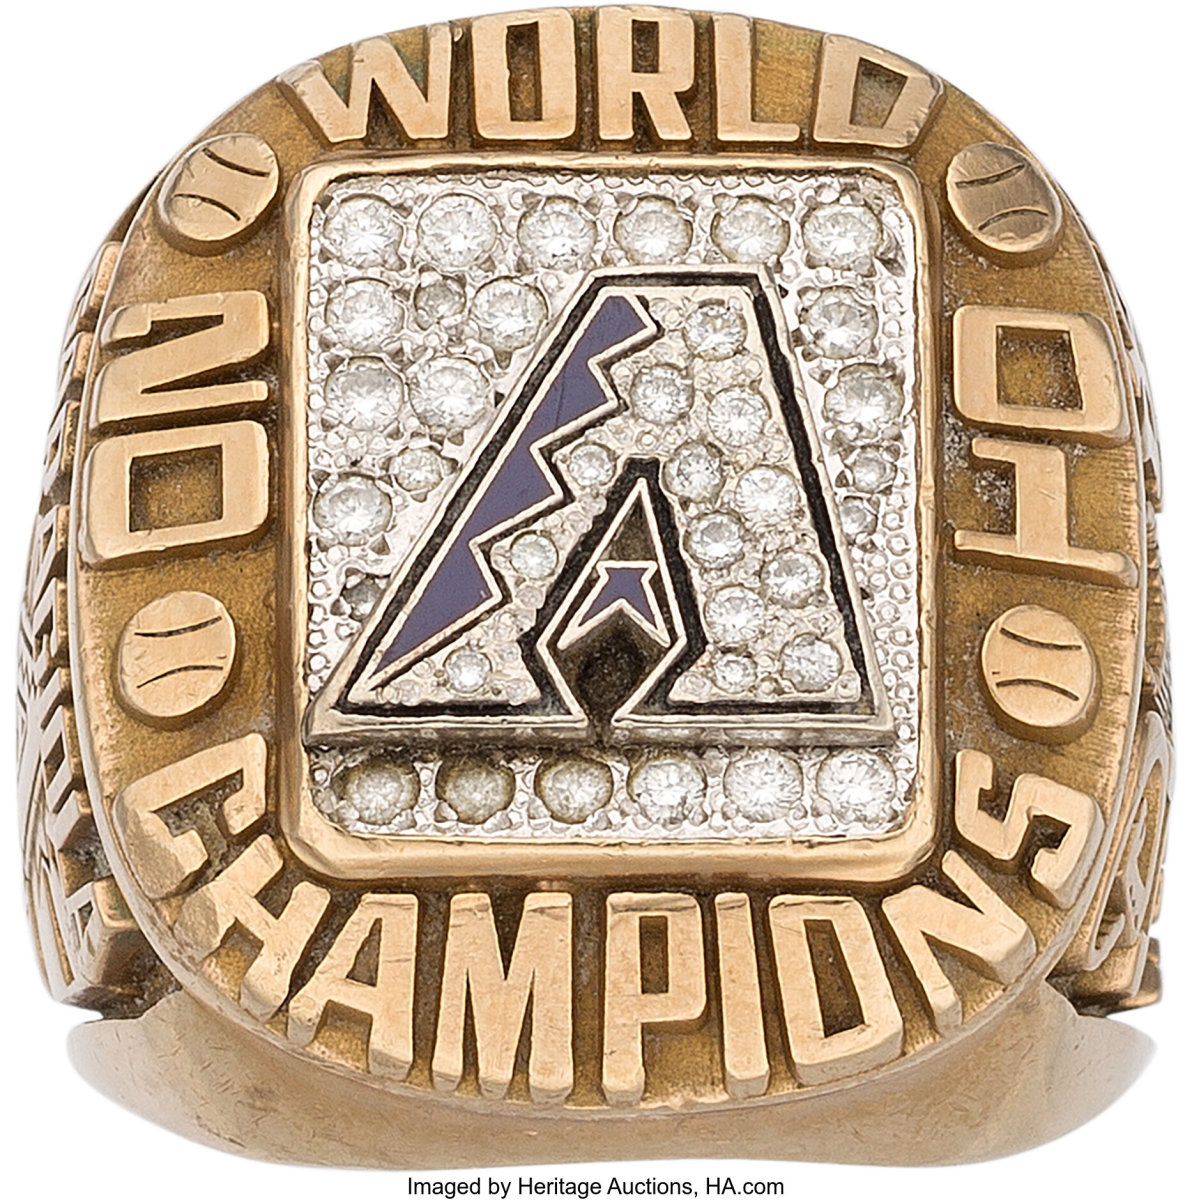 2001 Arizona Diamondbacks World Series ring from the Joe Garagiola Collection.